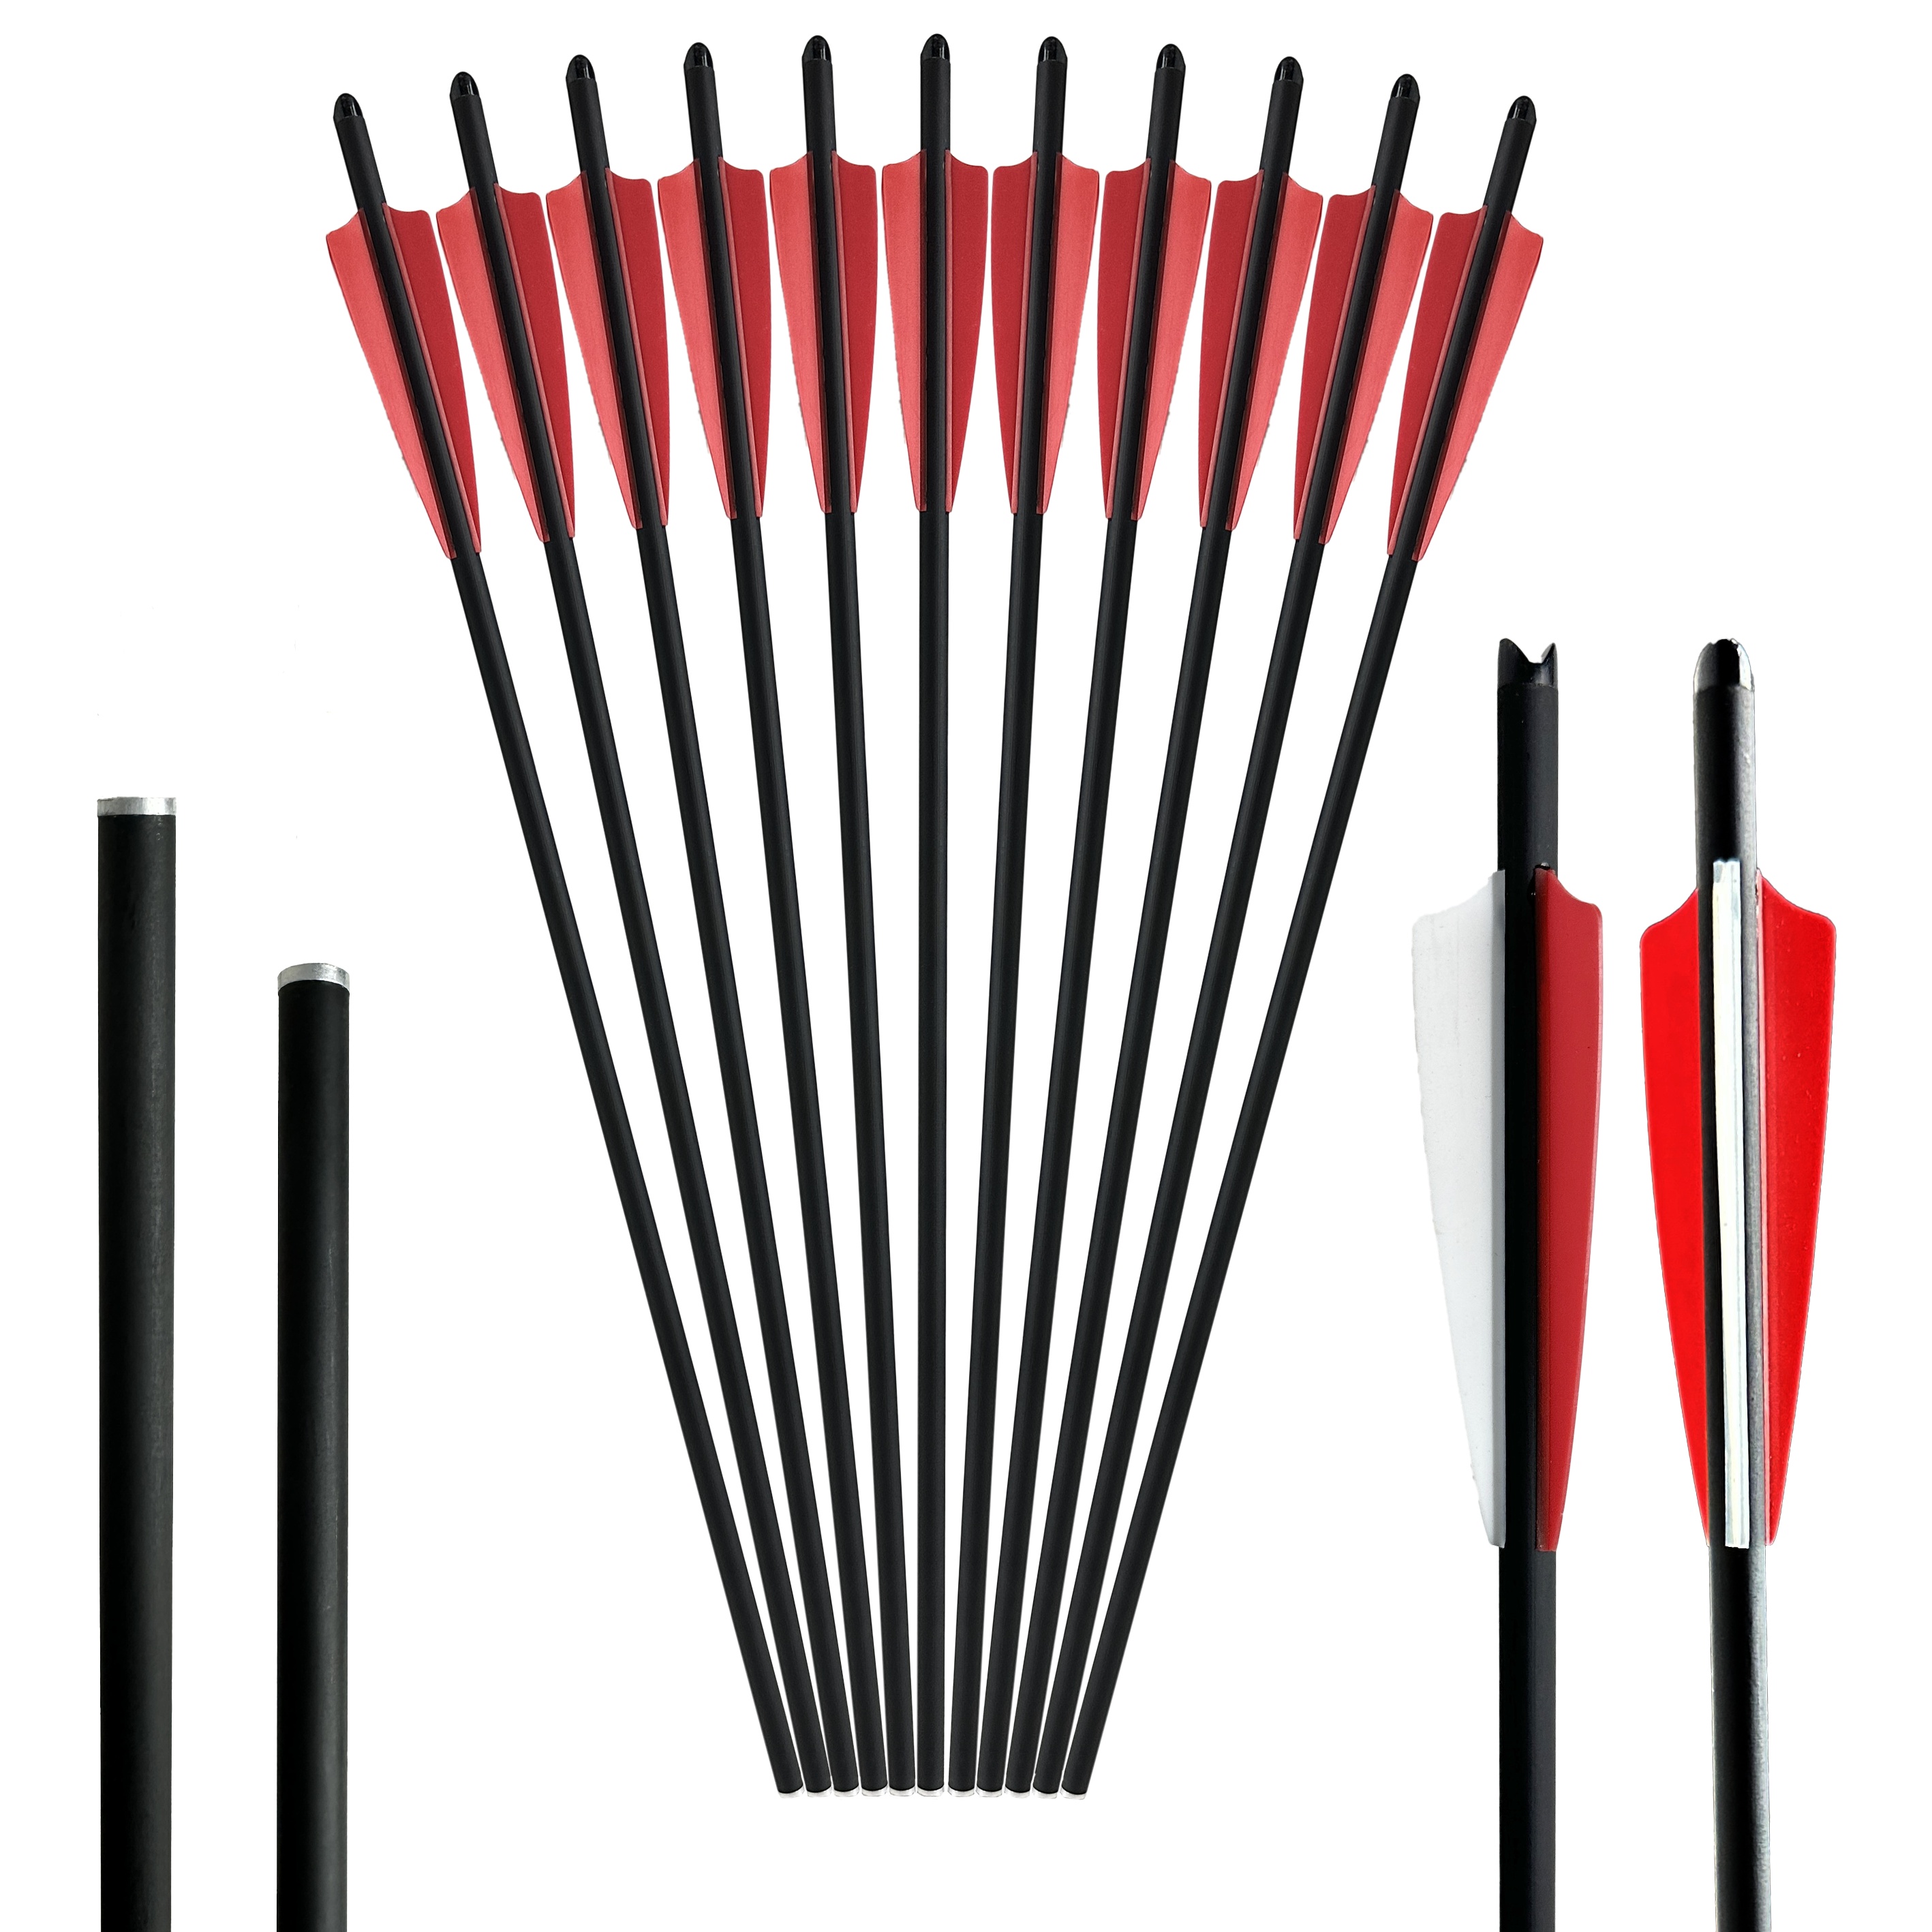 Archery Arrow and Quiver Set 12pcs Fletched Carbon Arrows with